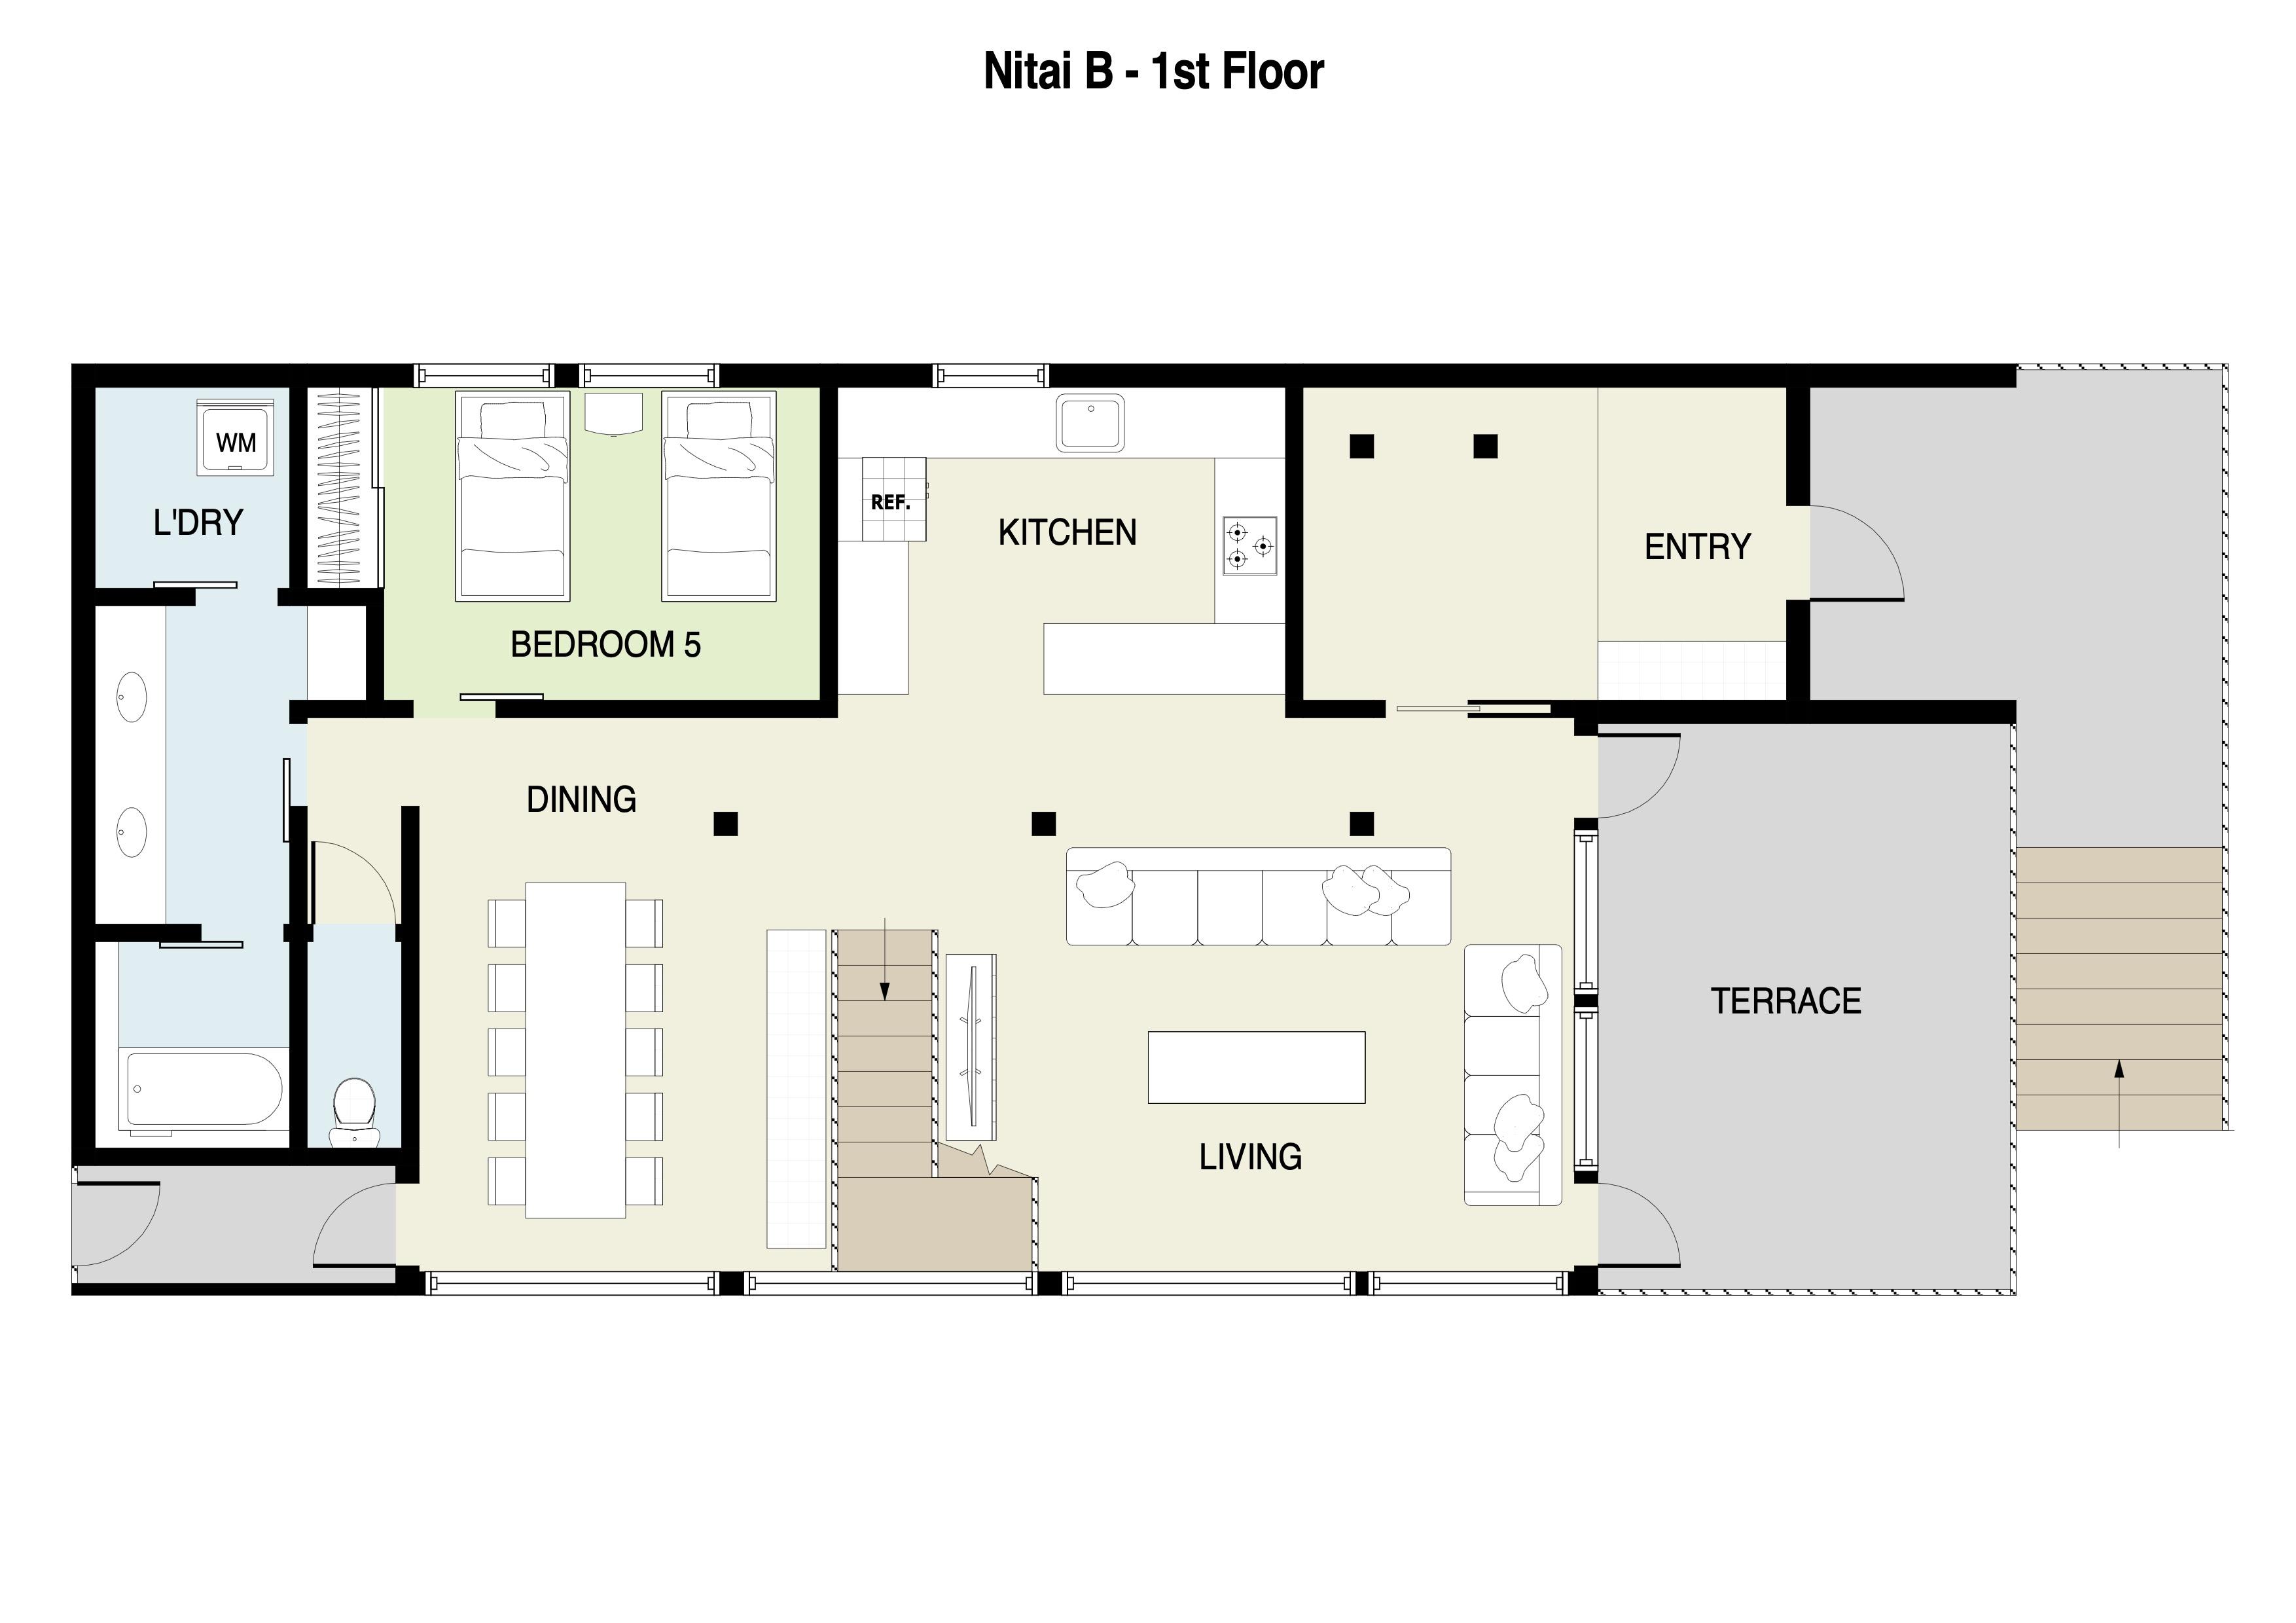 Nitai B 1st floor plans